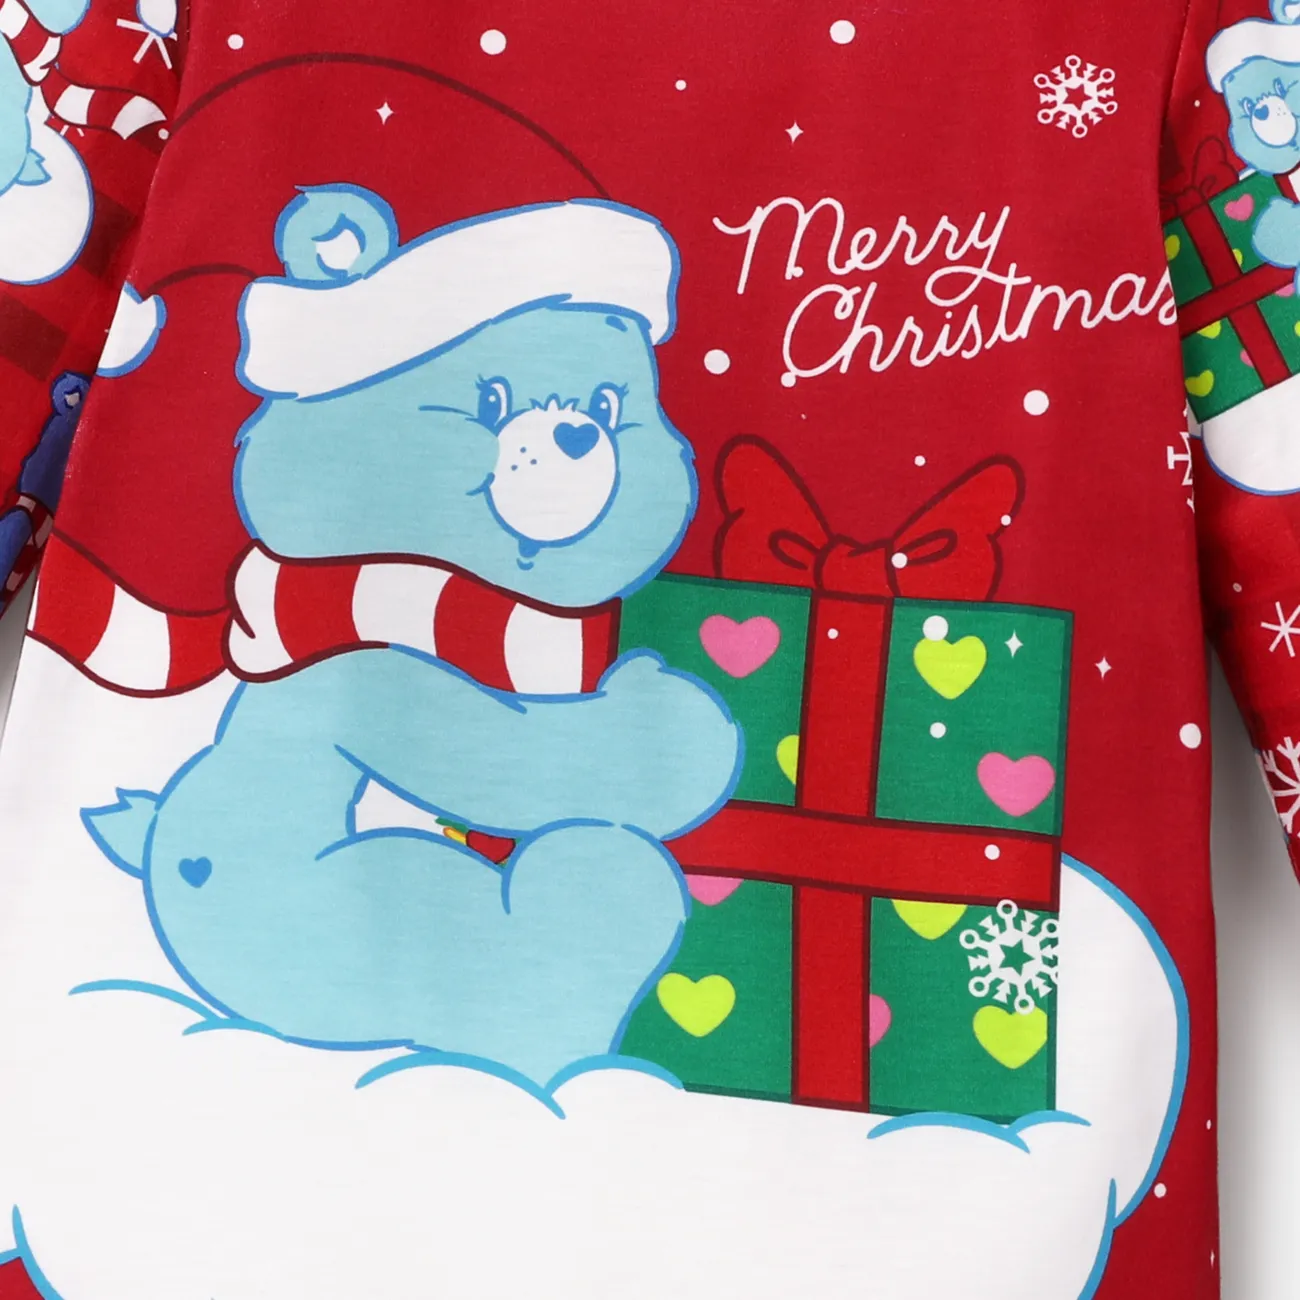 Ositos Cariñositos Navidad Looks familiares Manga larga Conjuntos combinados para familia Pijamas (Flame Resistant) Rojo big image 1